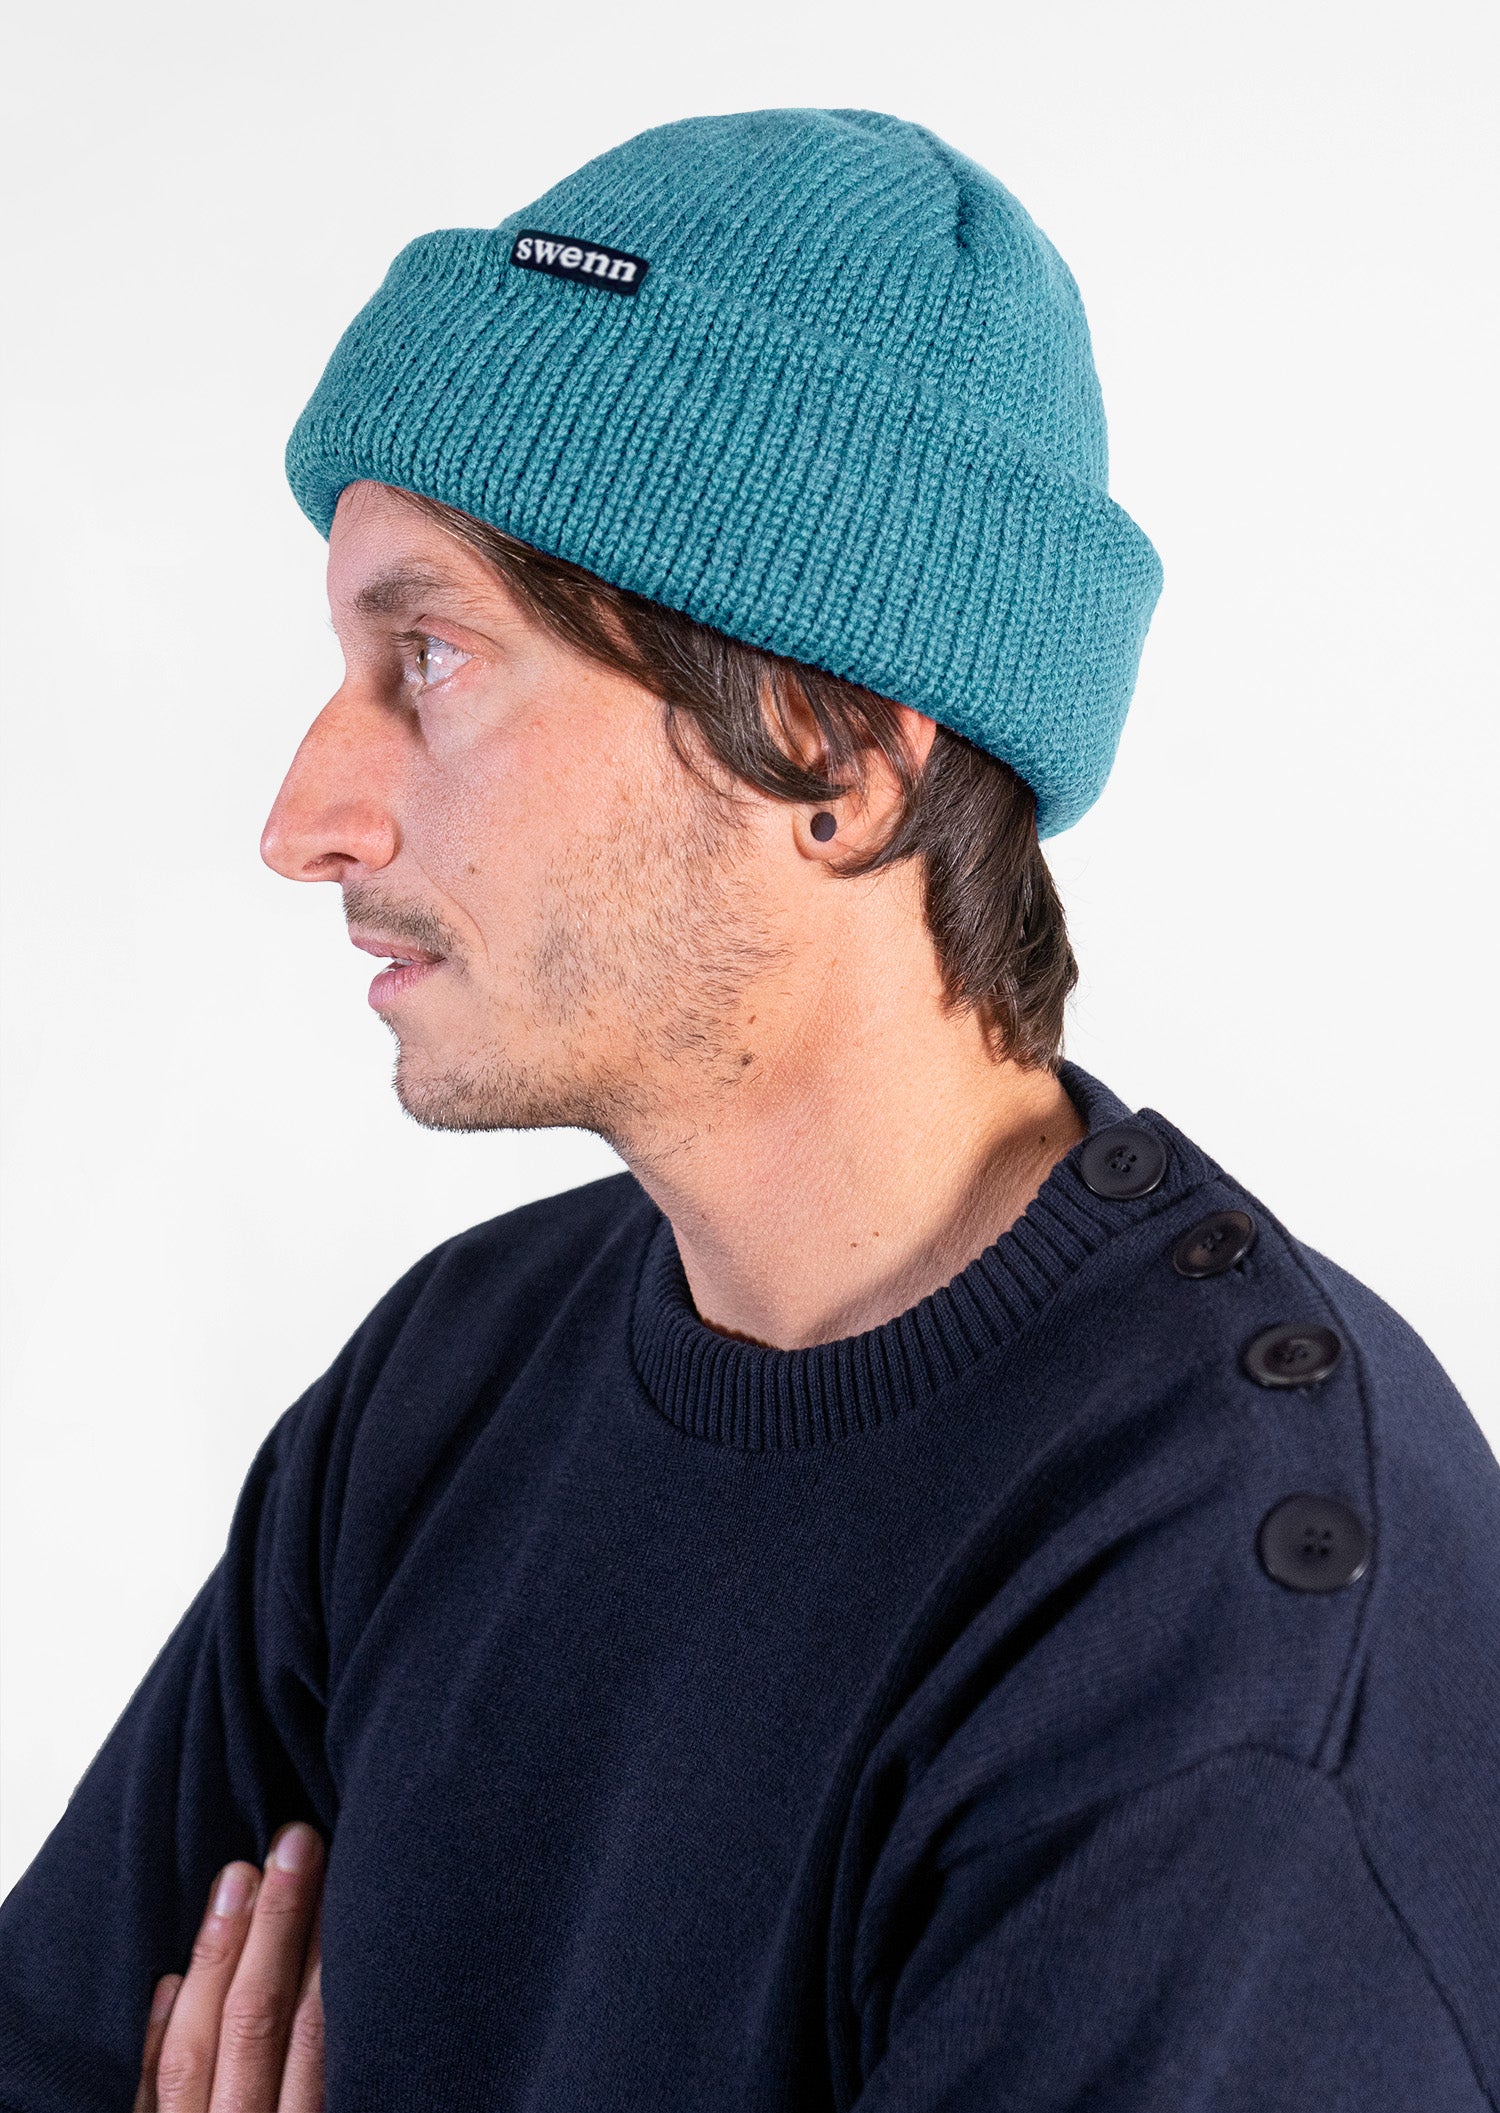 SWENN - Merino wool fisherman sweater, made in Quebec